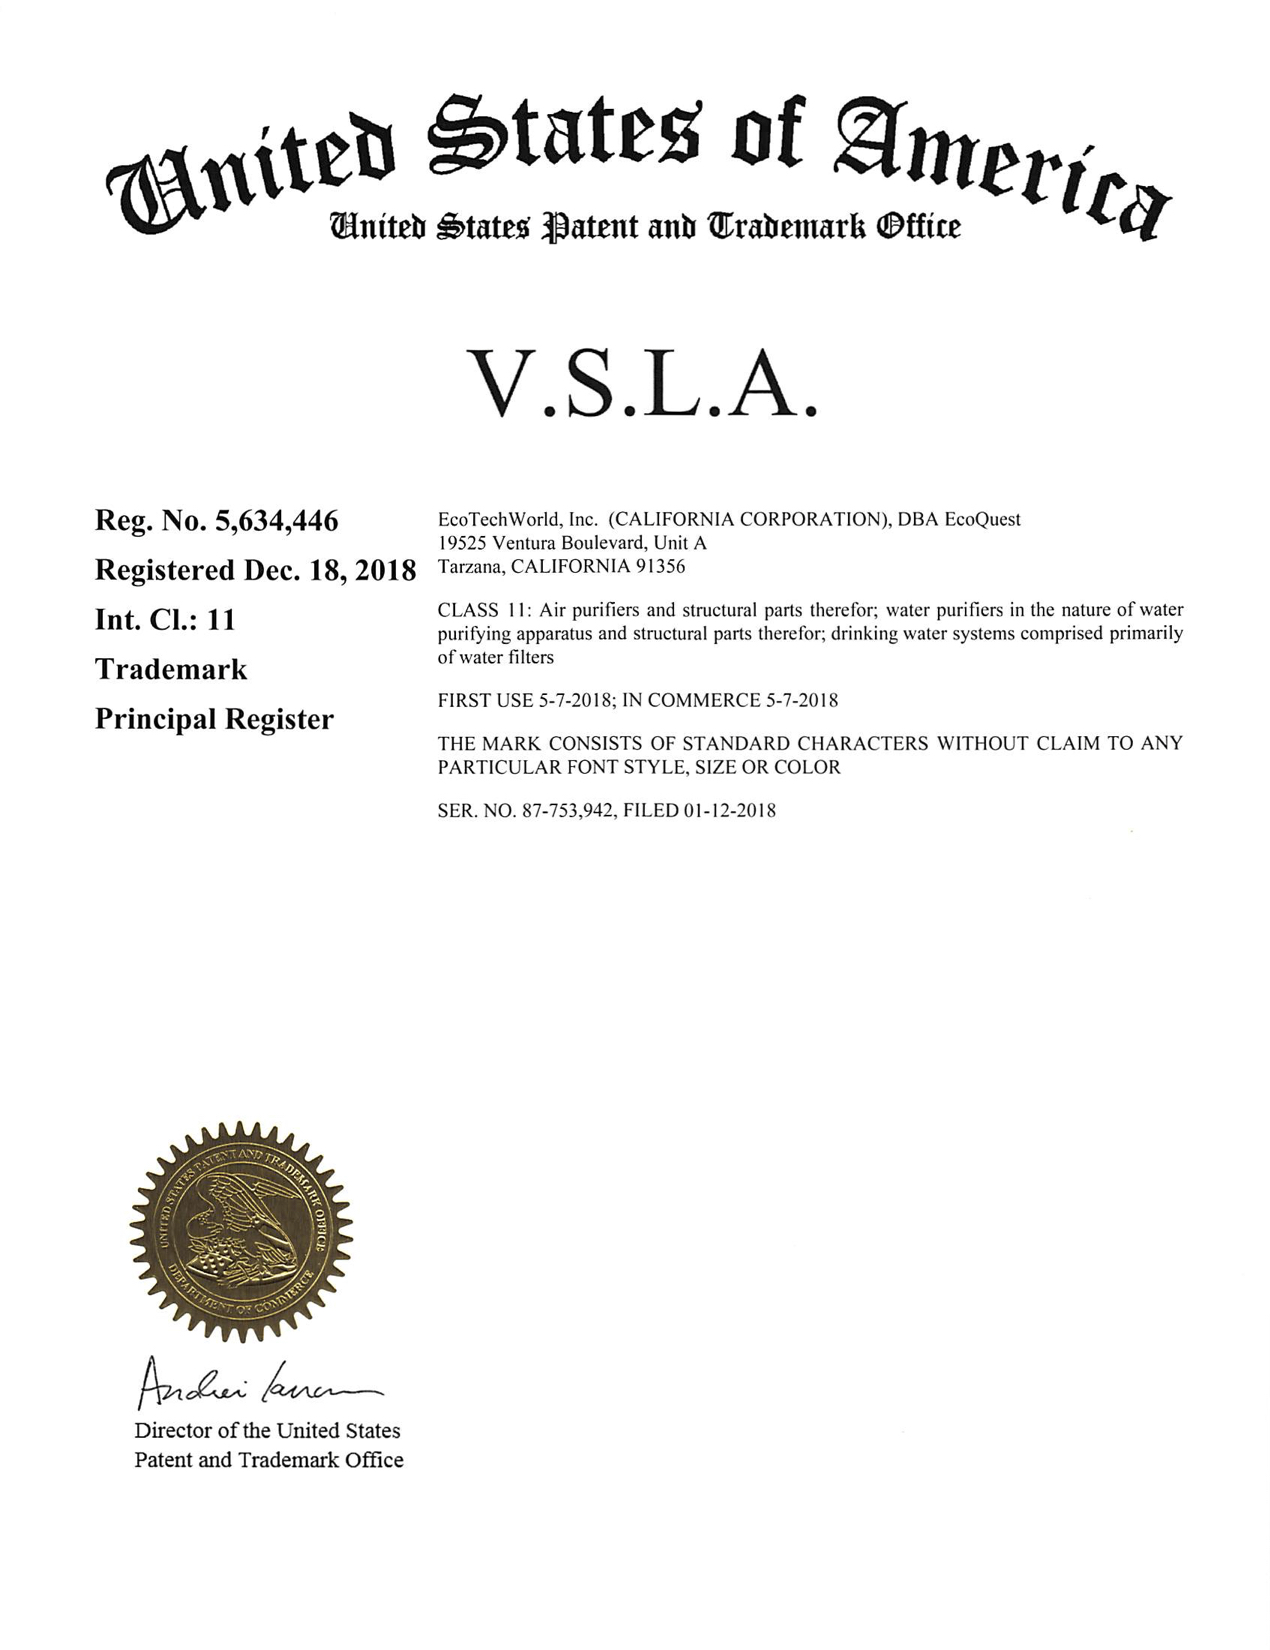 vsla-trademark-certificate.jpg